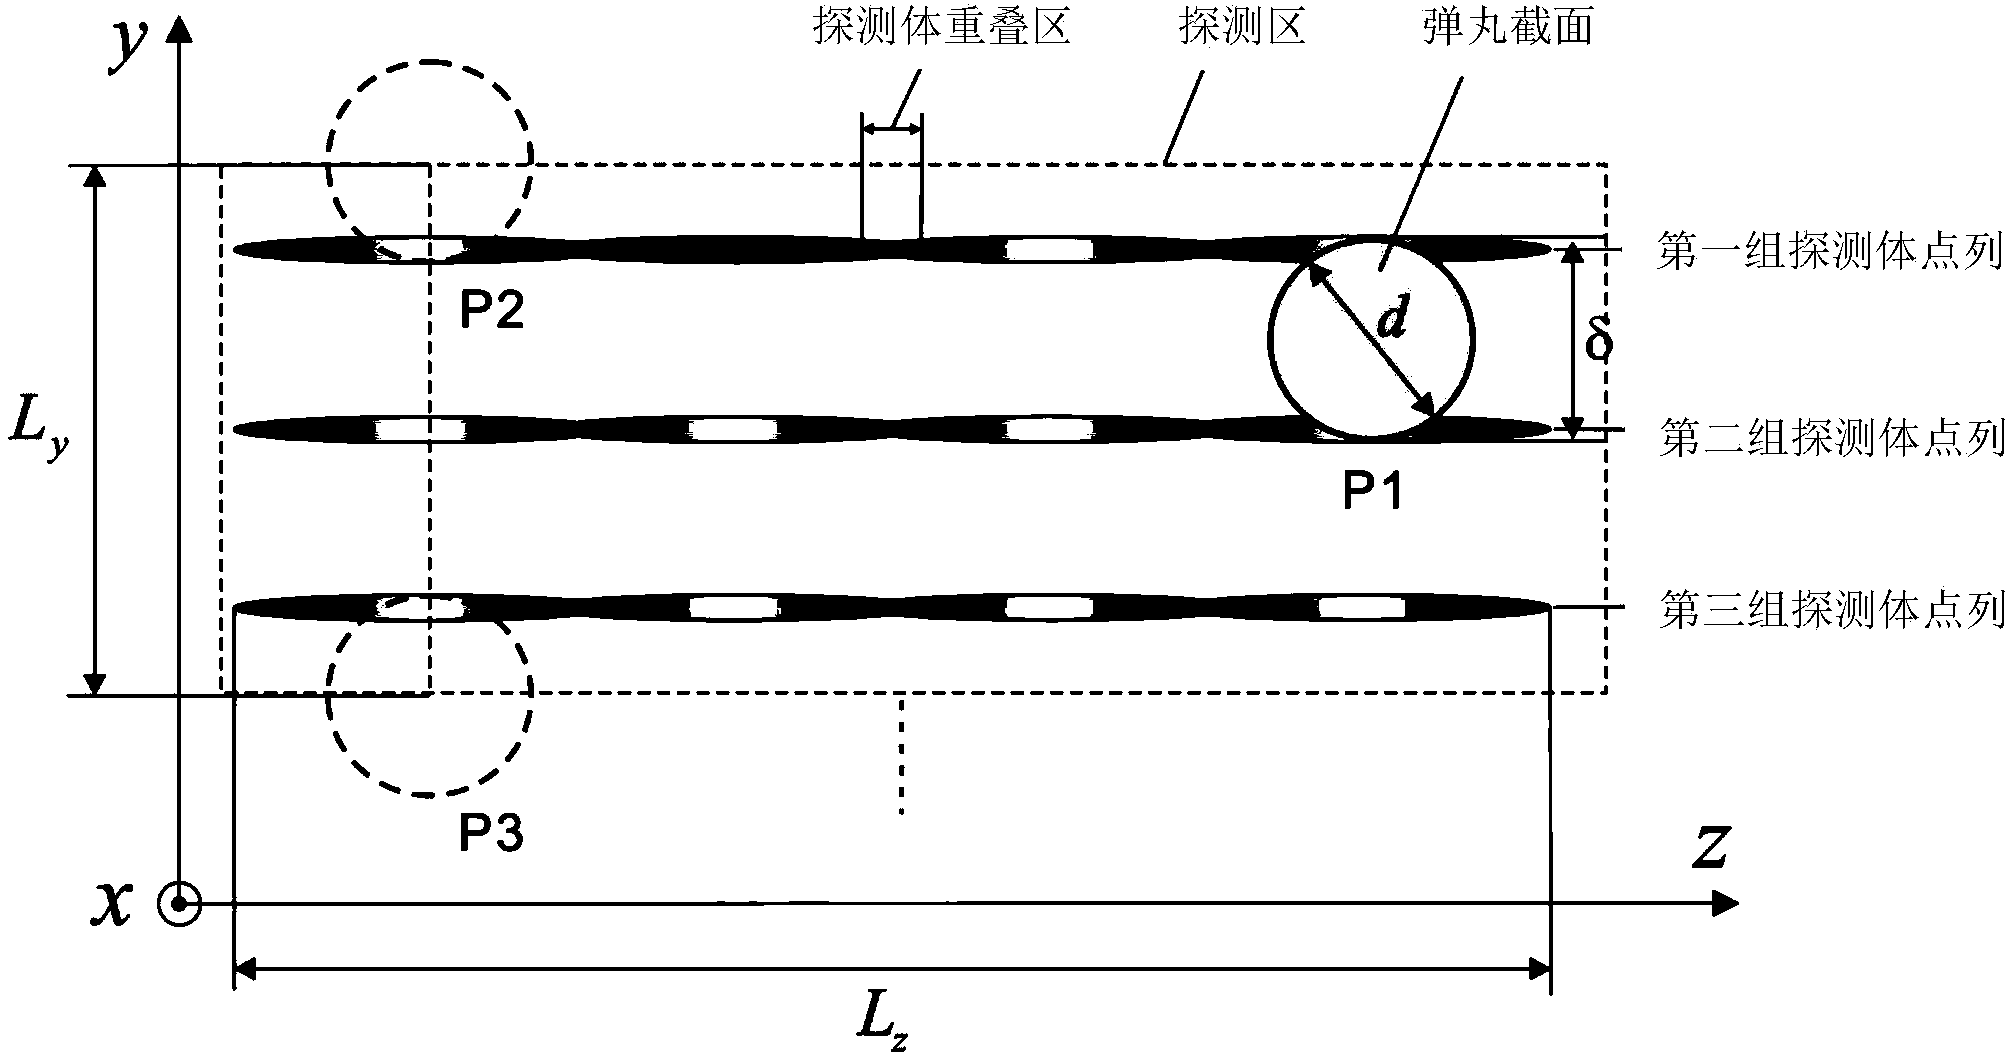 Two-dimensional point range type laser Doppler speed measurement device